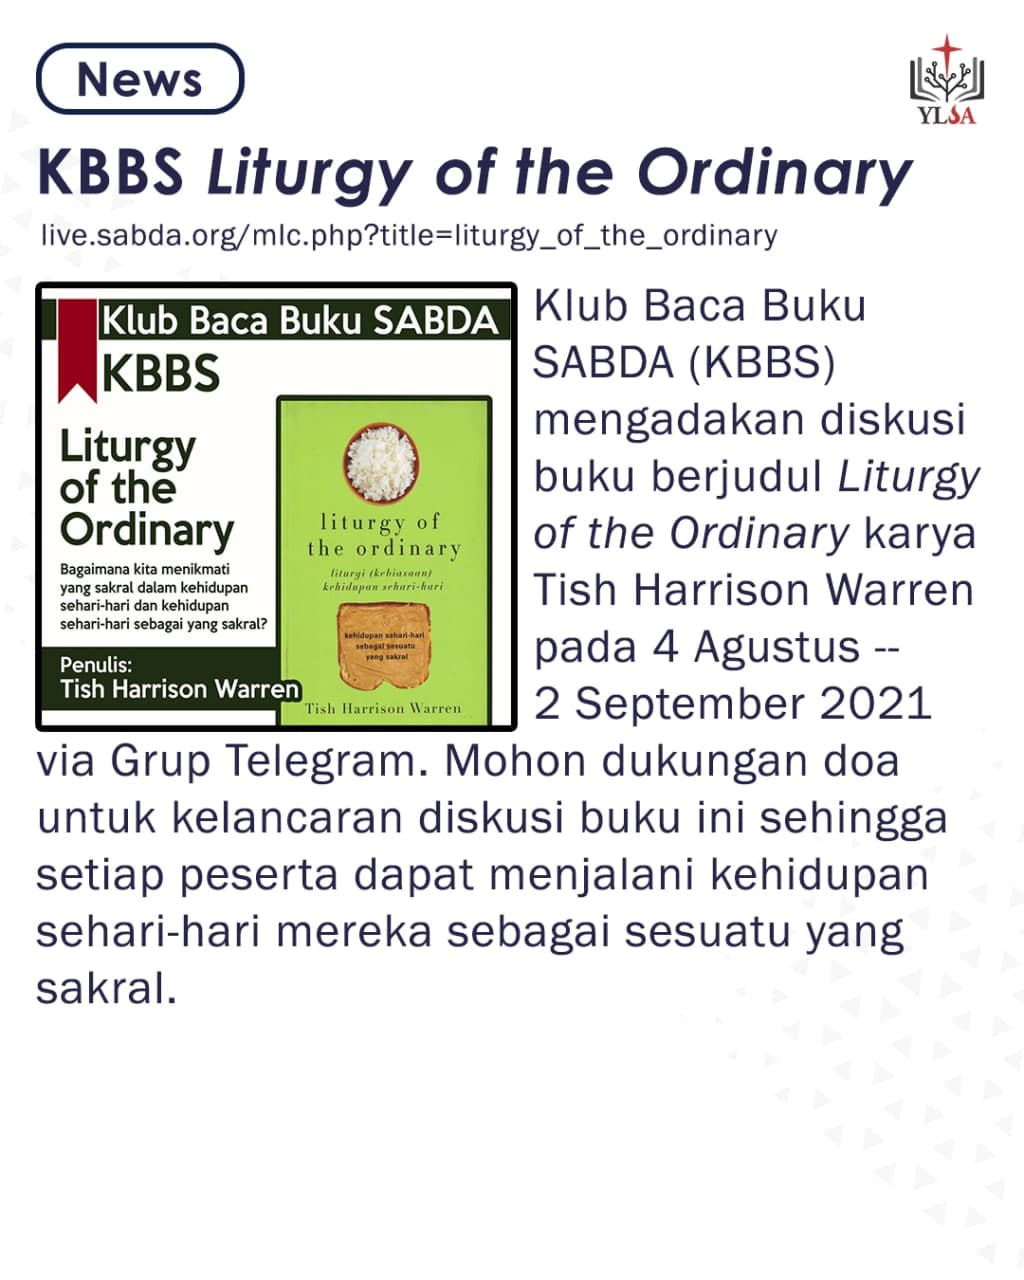 KBBS mengadakan diskusi buku 'Liturgy of the Ordinary' karya Tish Harrison Warren pada 4 Agustus -- 2 September 2021 via Telegram.